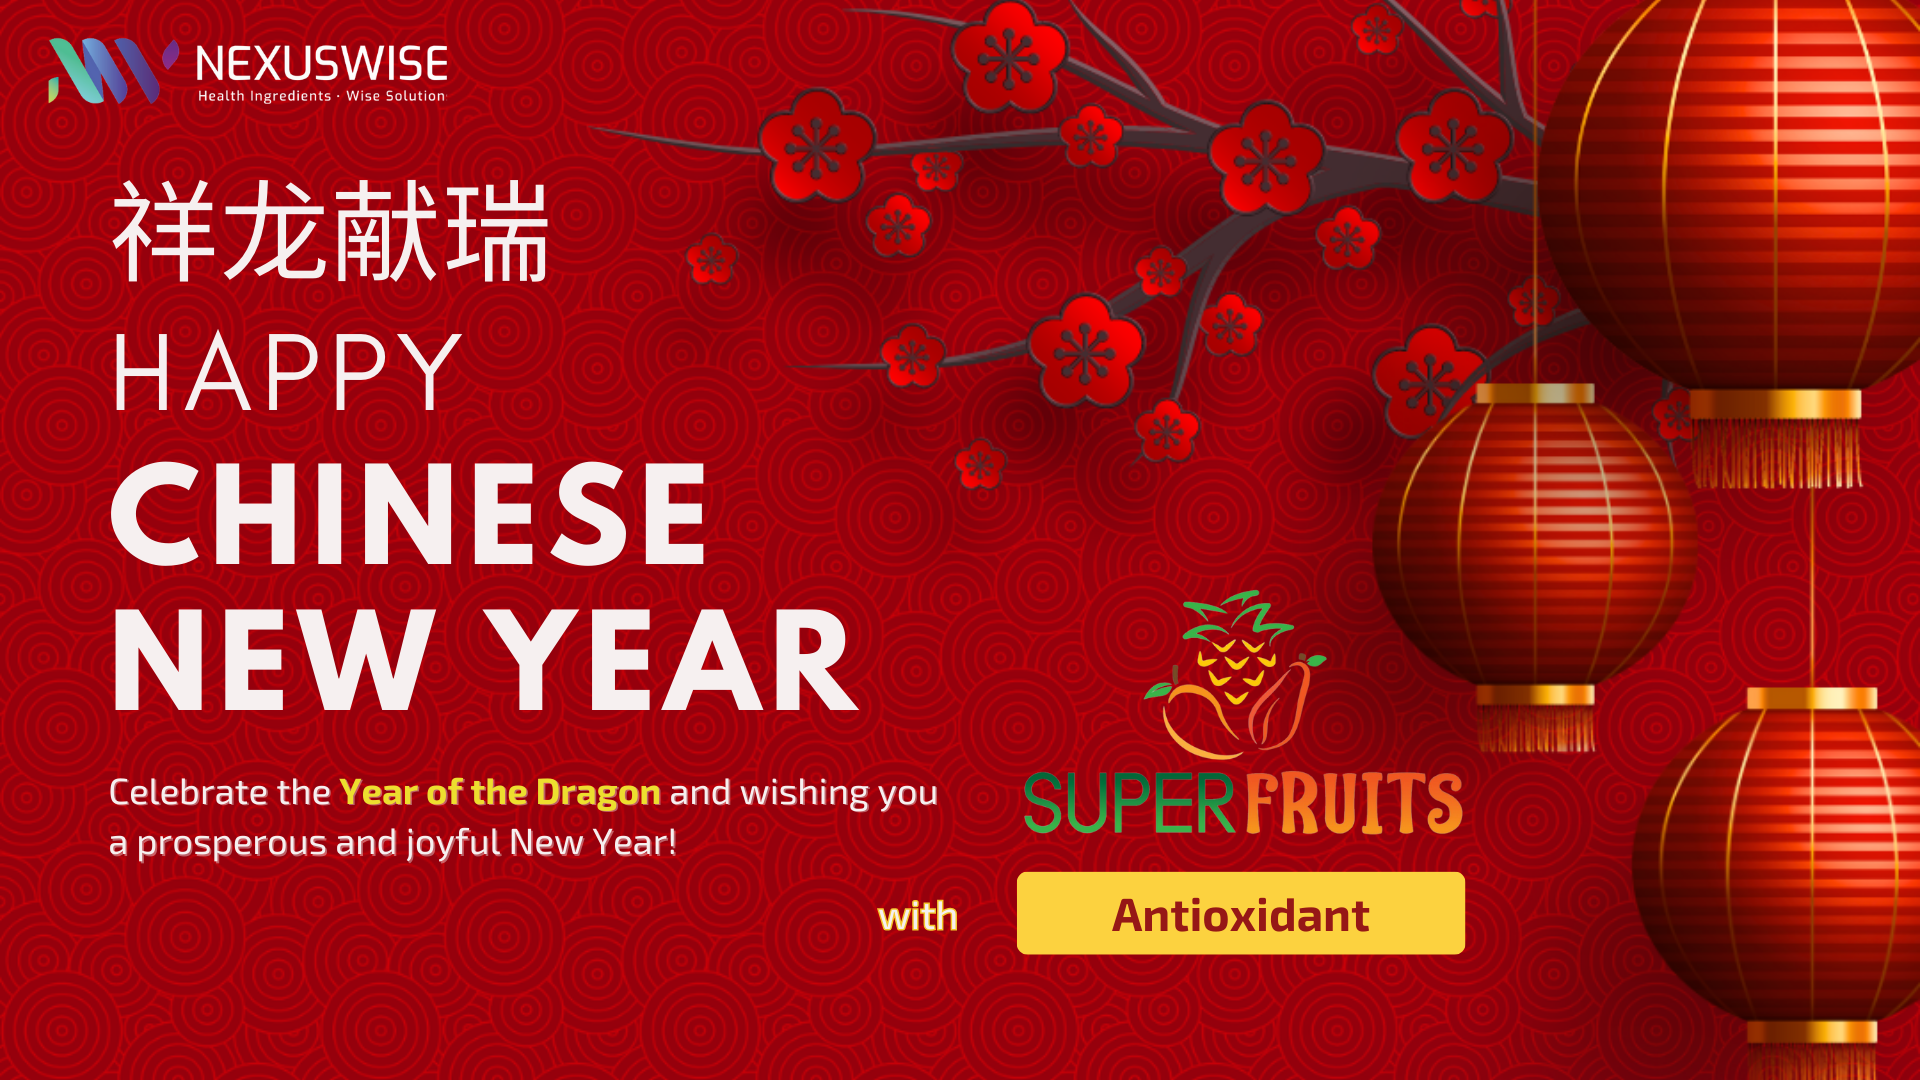 nexus wise celebrate chinese new year with nexus wise wishing you prosperity and joy 01